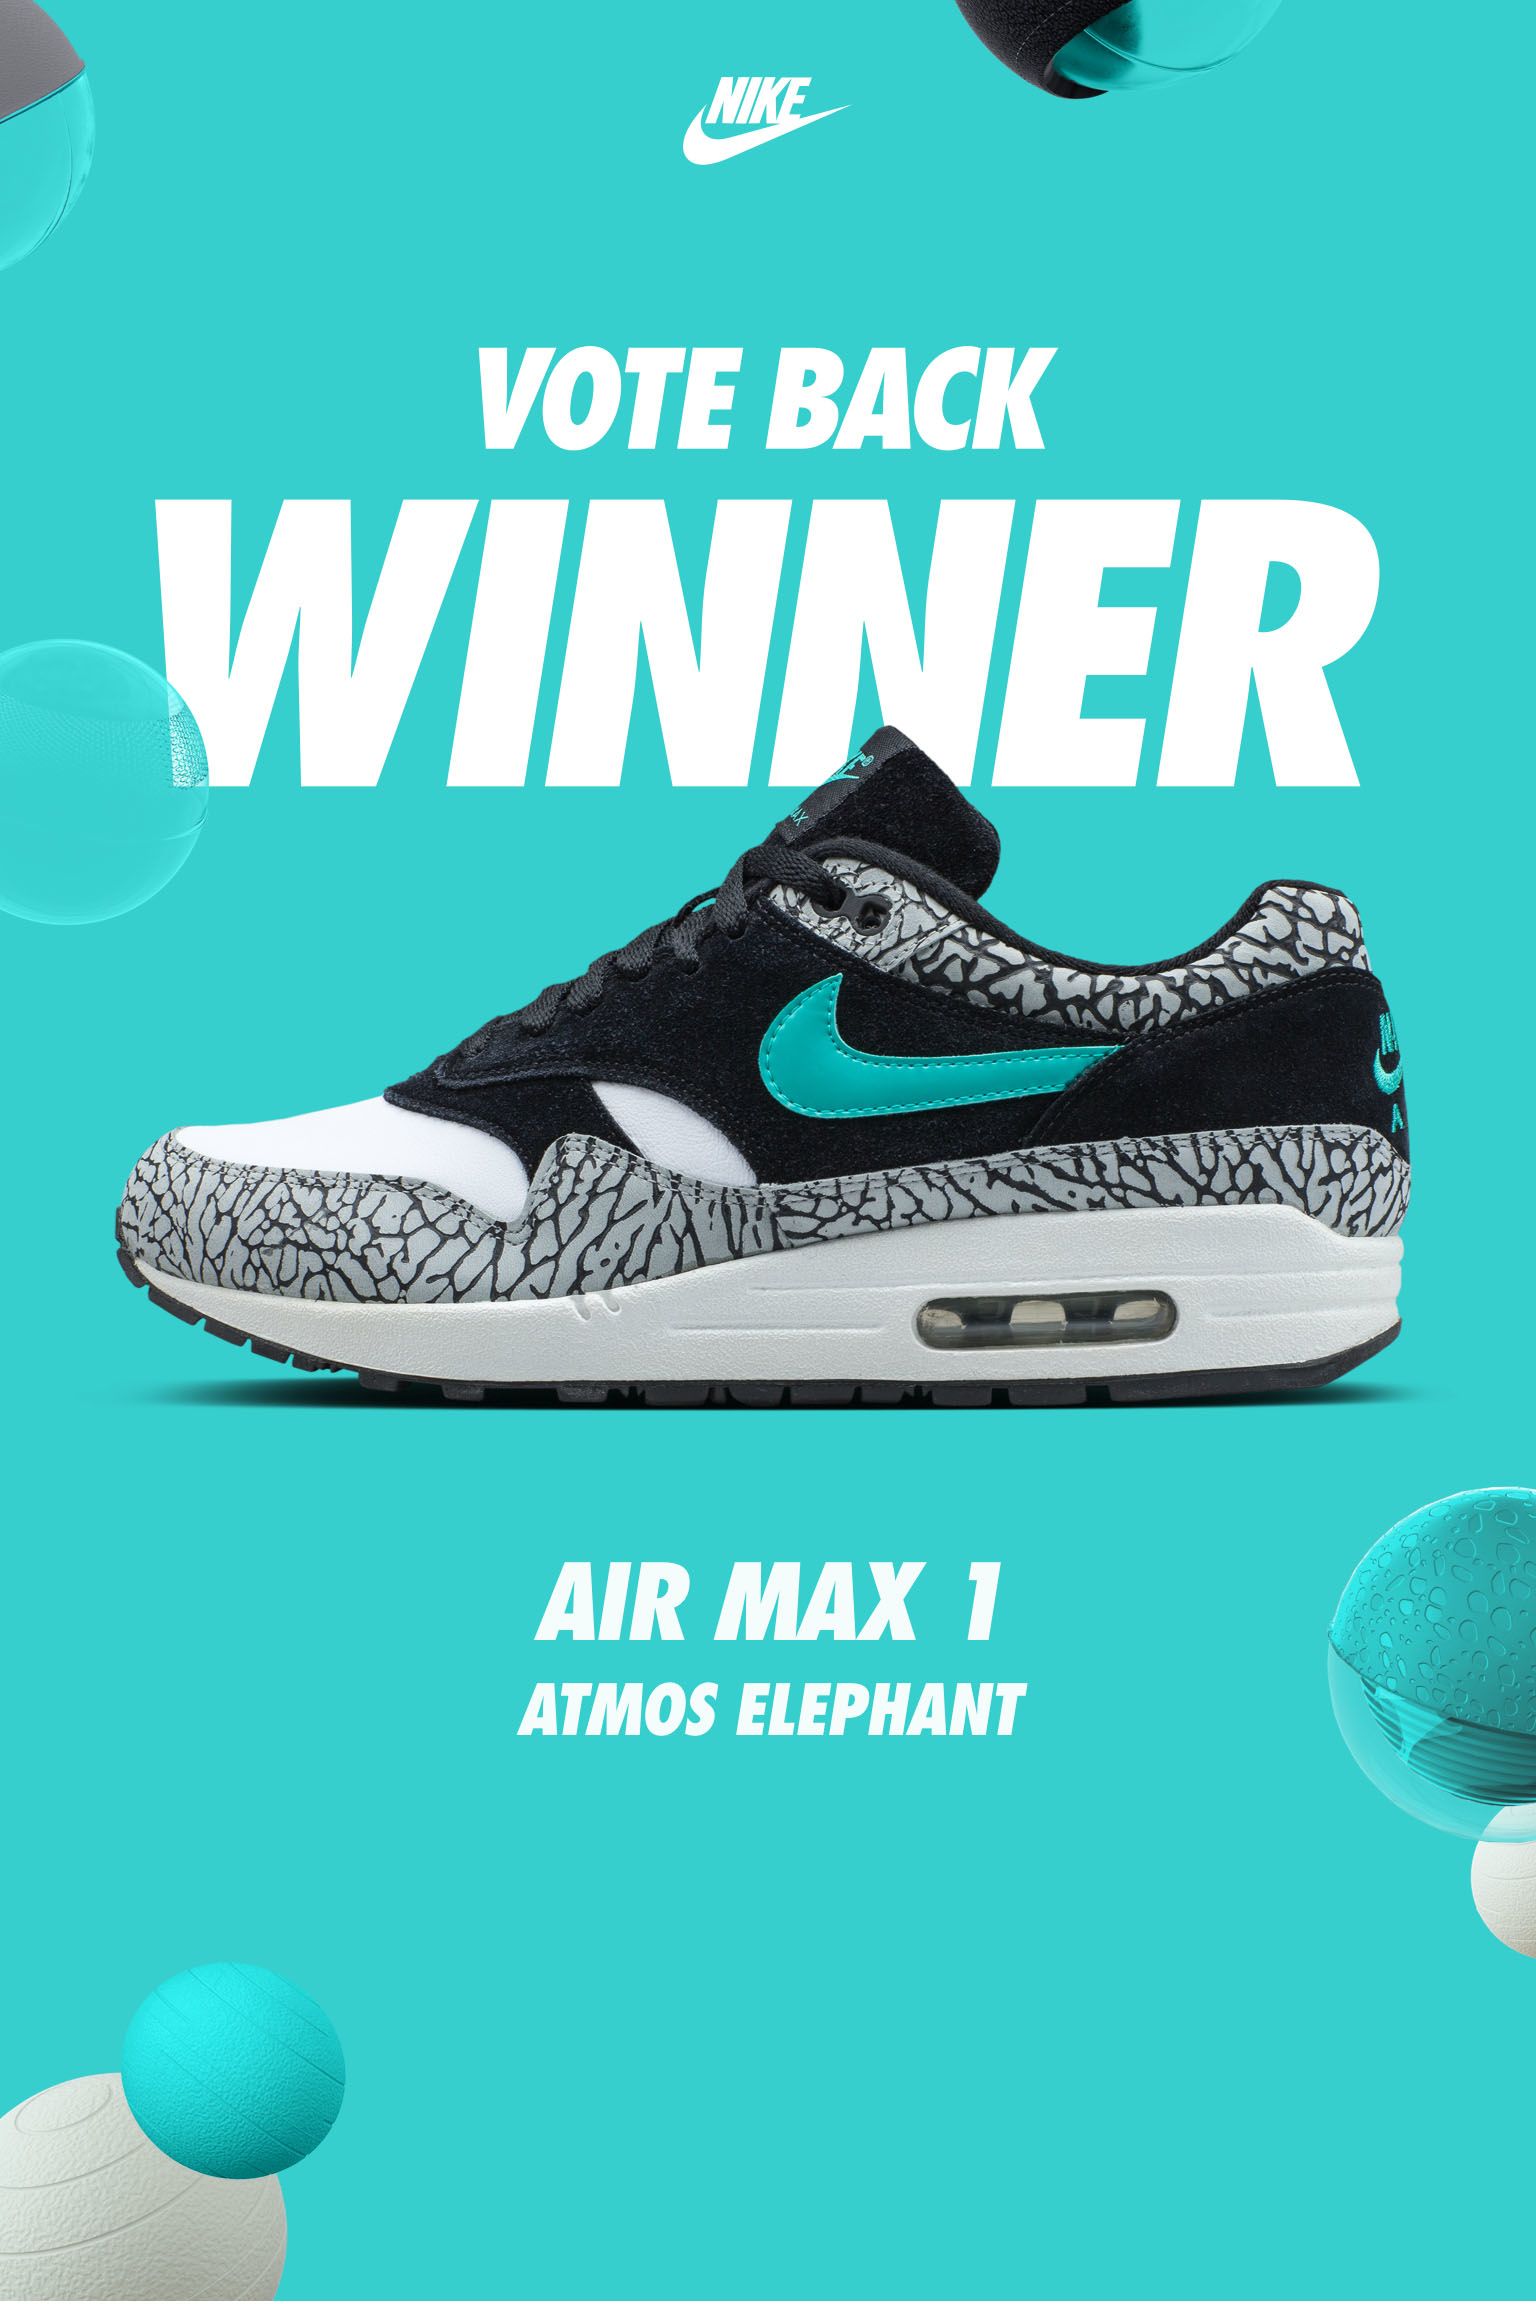 air max day vote